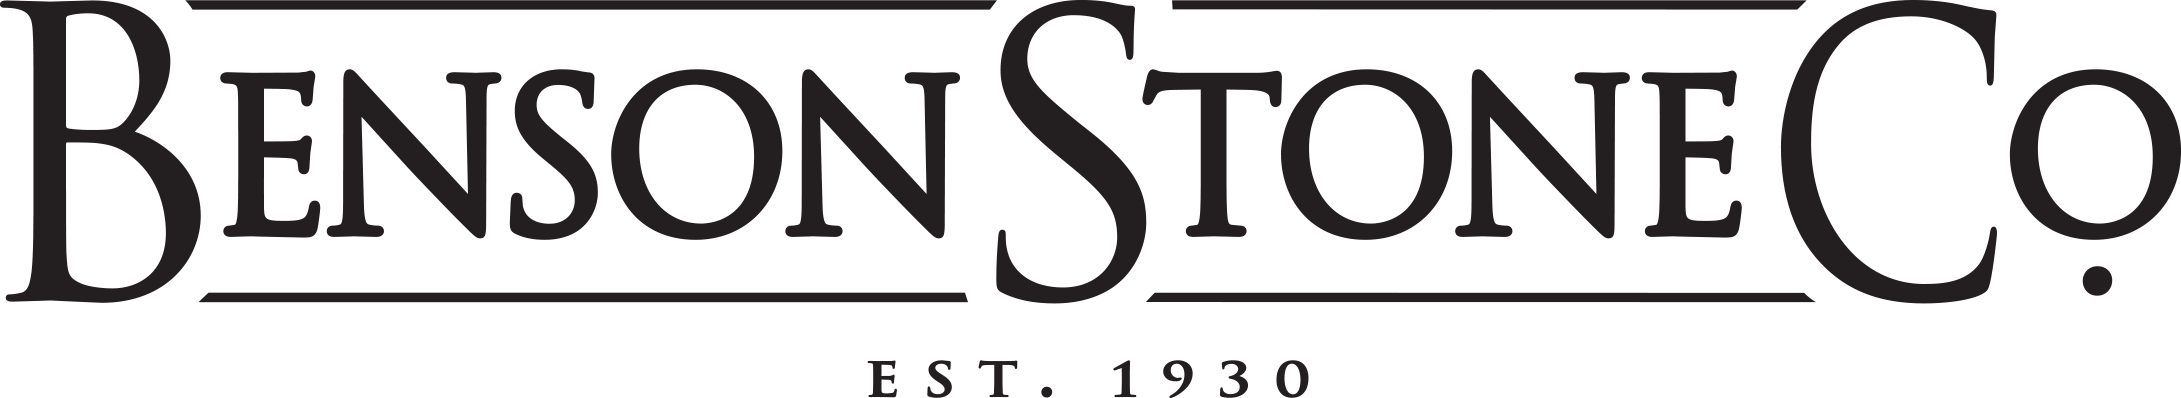 Benson Stone Co.